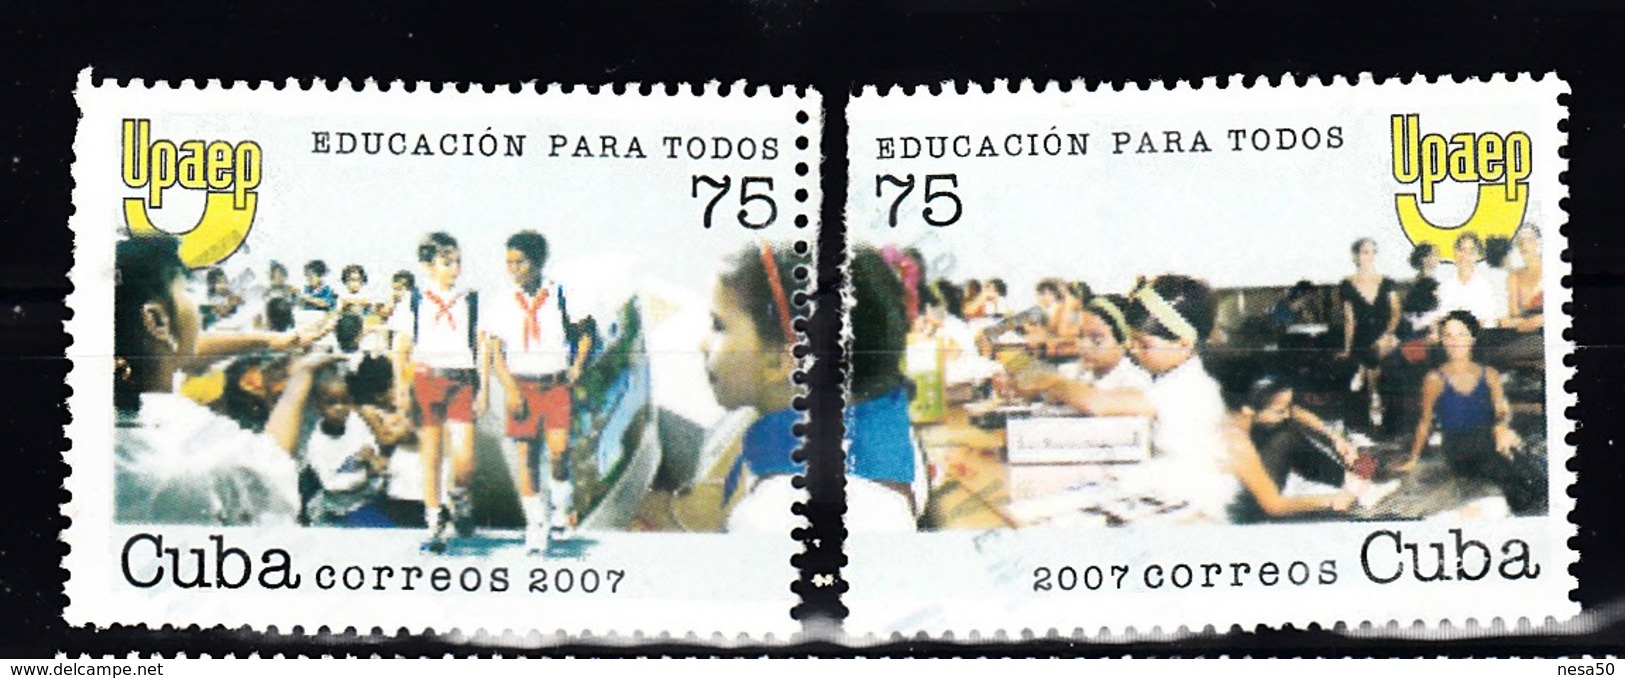 Cuba 2007 Mi Nr 4990 + 4991; Kinderen In Ontwikkeling - Gebraucht